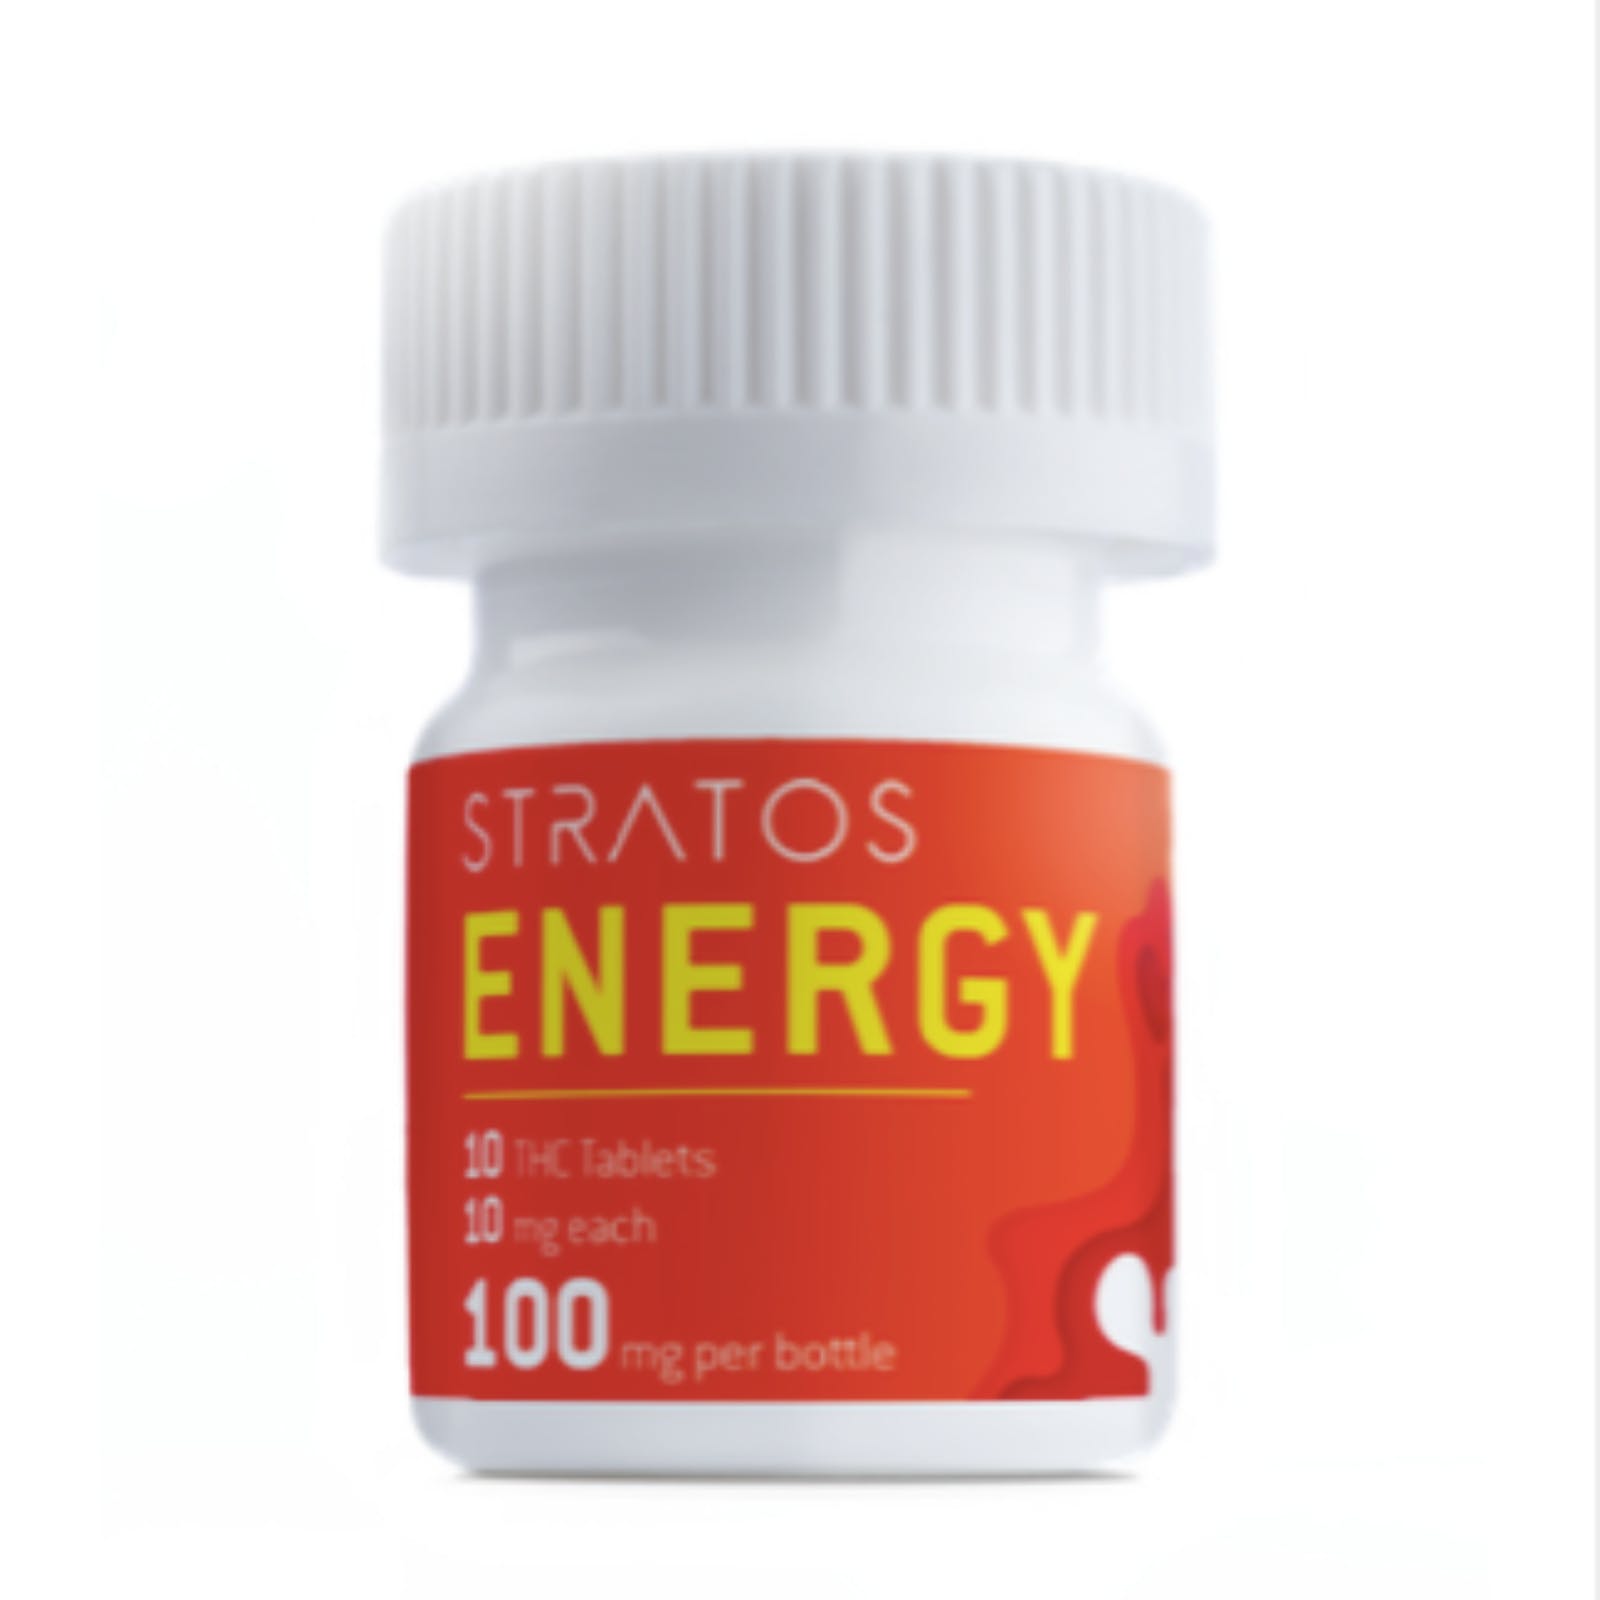 Stratos Energy 100mg bottle